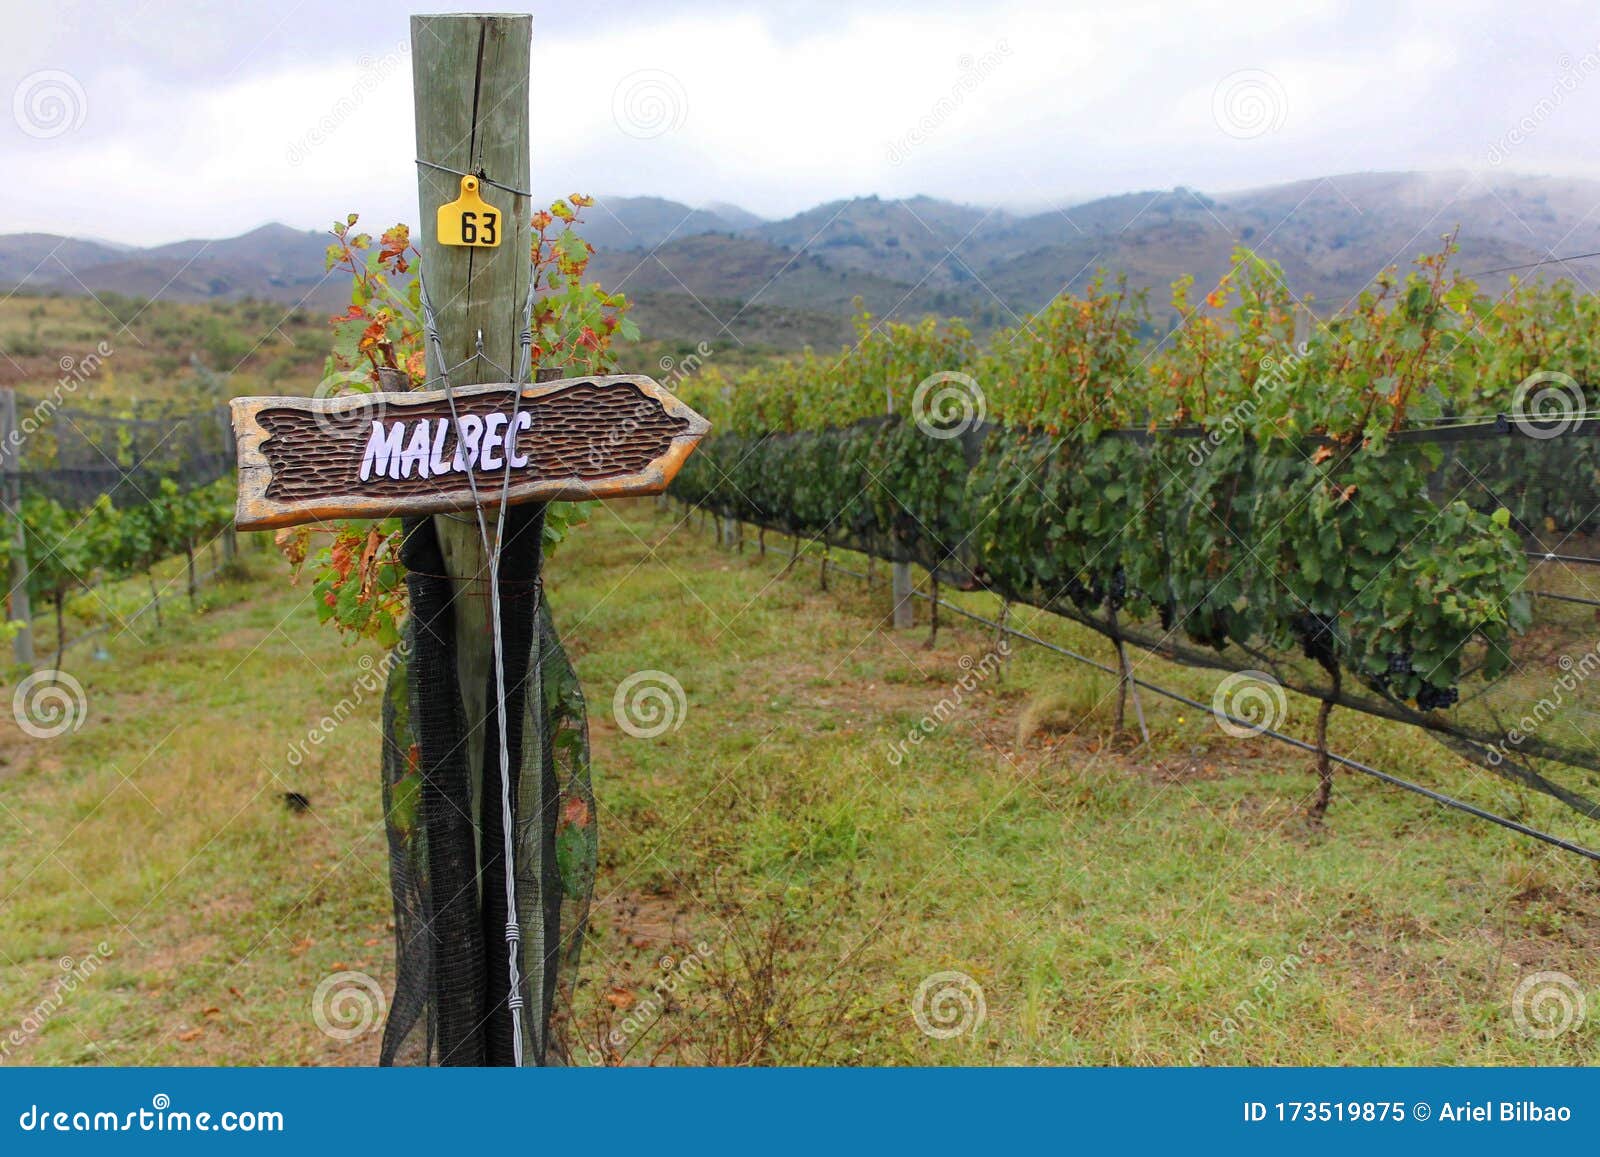 malbec vineyards in mendoza province, argentina